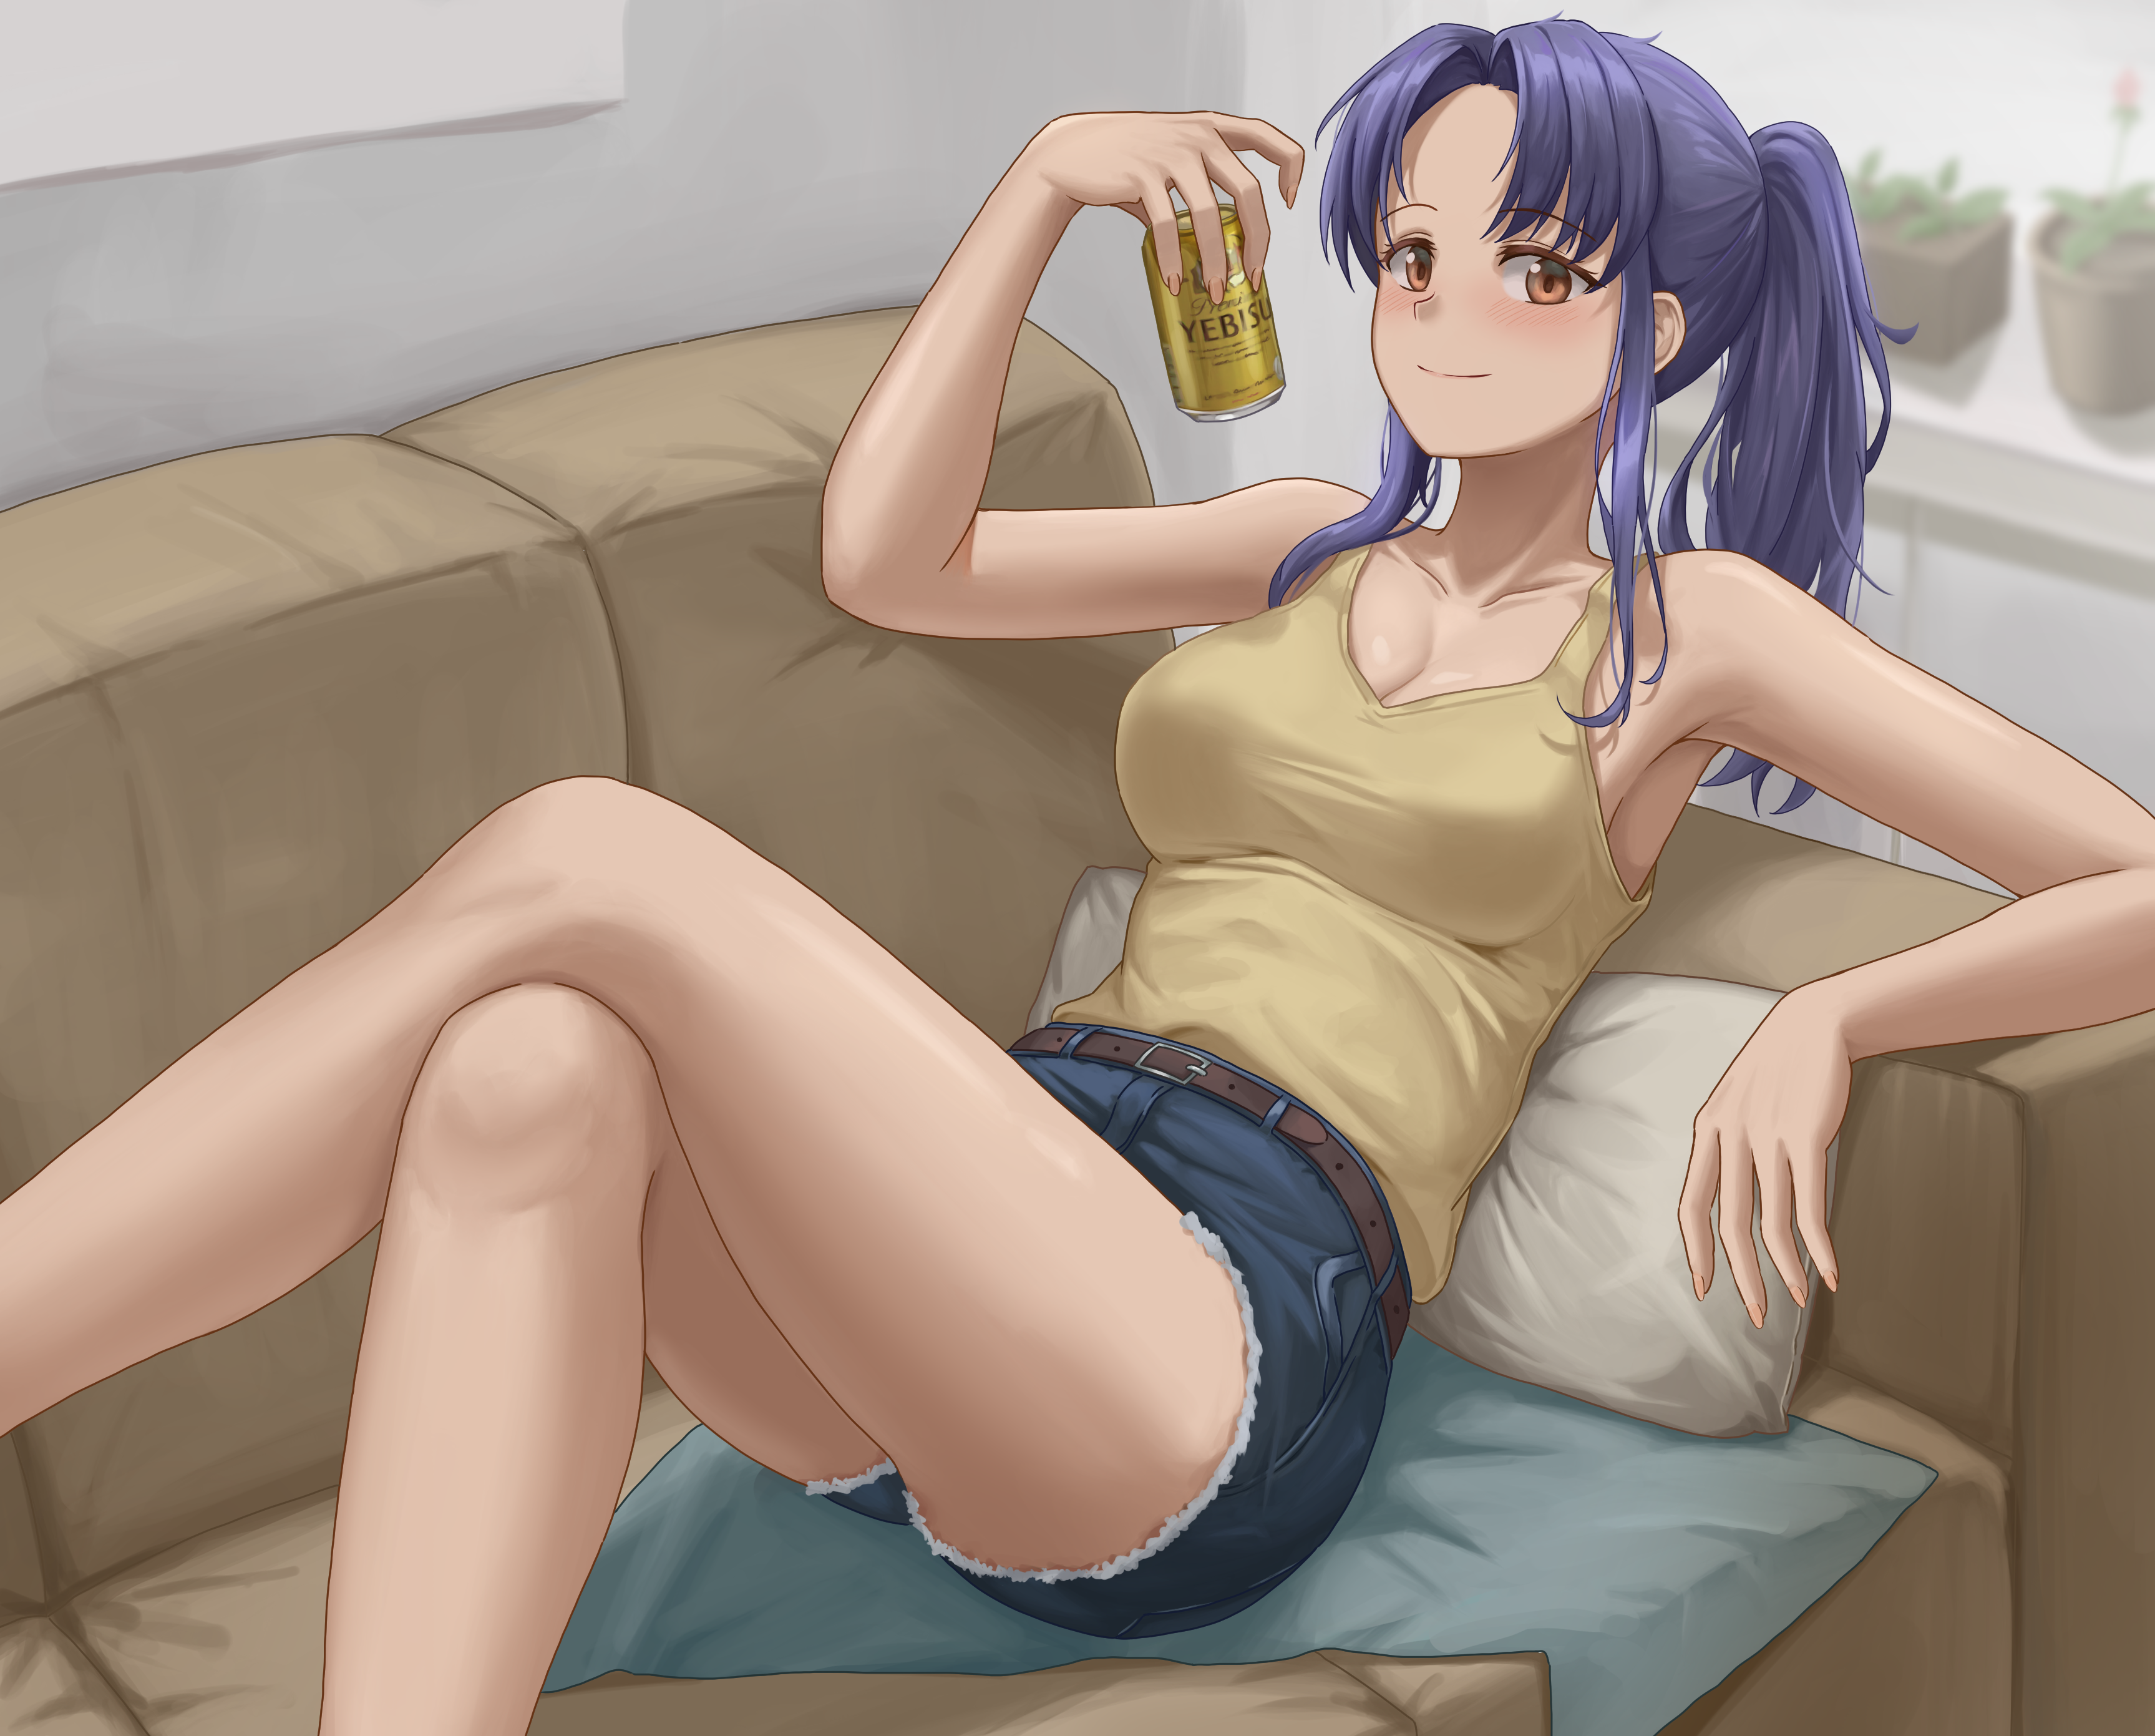 Anime 3454x2782 anime anime girls digital art artwork 2D looking at viewer shorts couch purple hair Neon Genesis Evangelion Katsuragi Misato